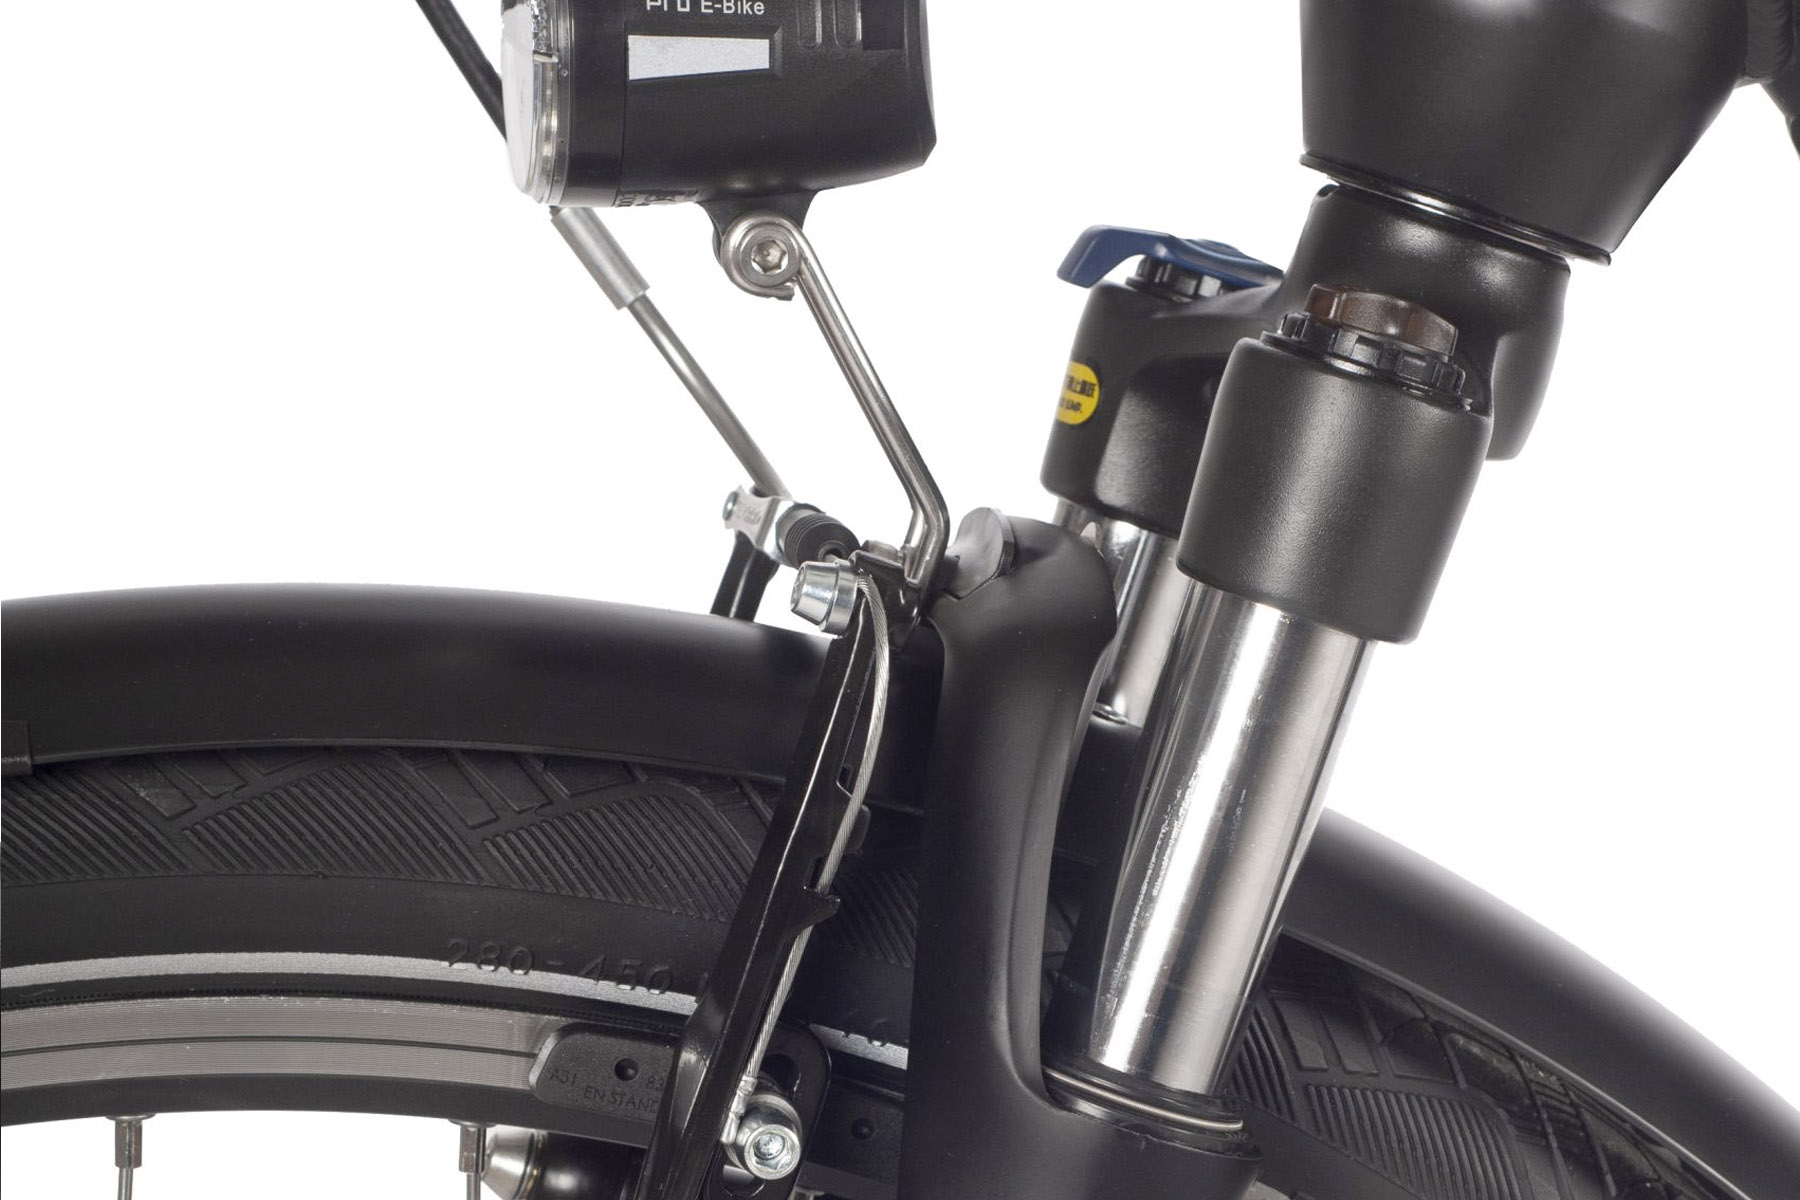 Plus Rahmenhöhe: Comfort 470 SAXONETTE Wh, 42 Silber) cm, Zoll, 4.0 (Laufradgröße: Citybike Damen-Rad, 28